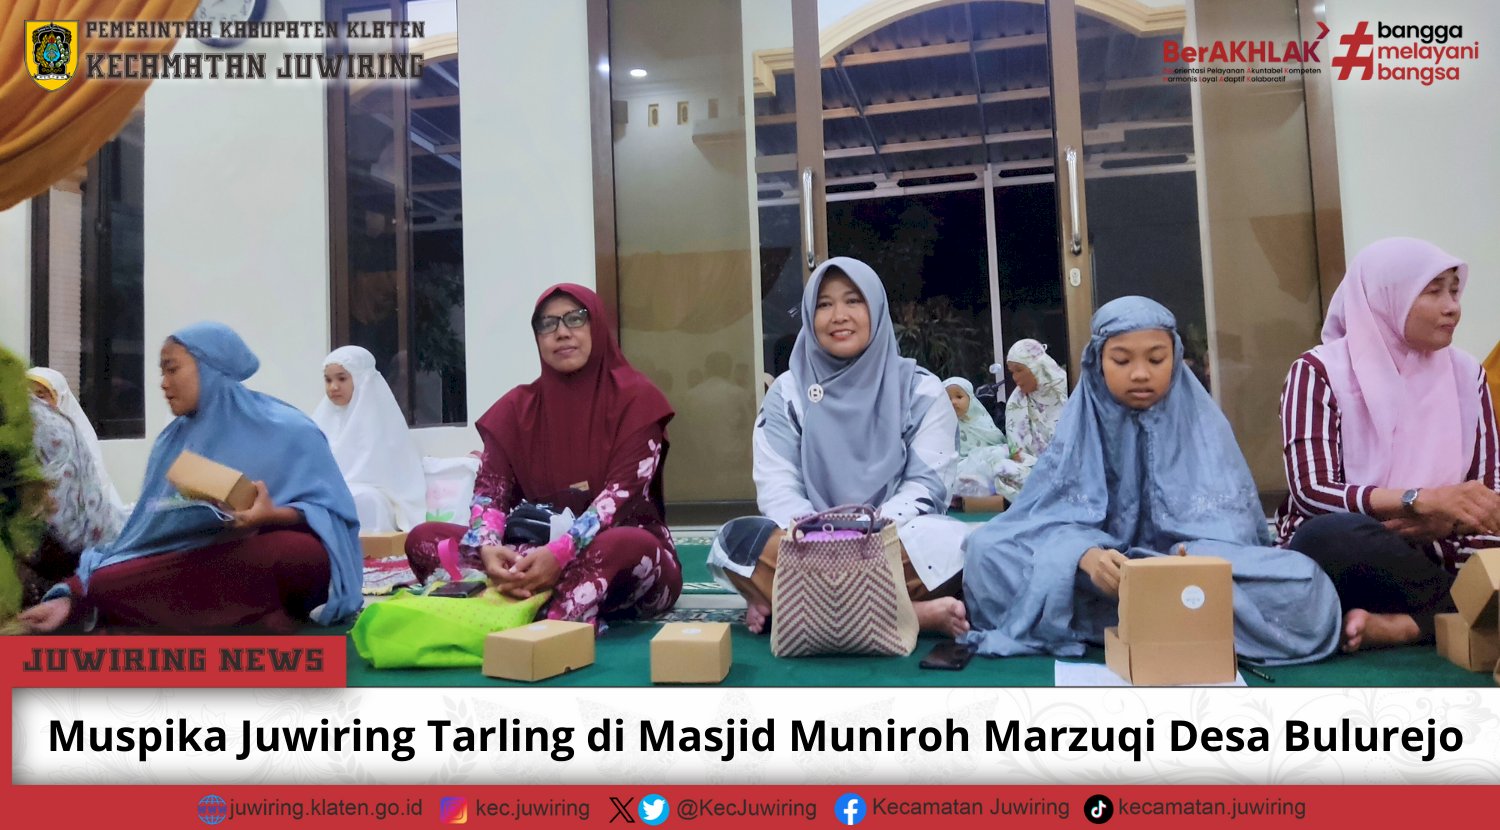 Muspika Juwiring Tarling di Masjid Muniroh Marzuqi Desa Bulurejo